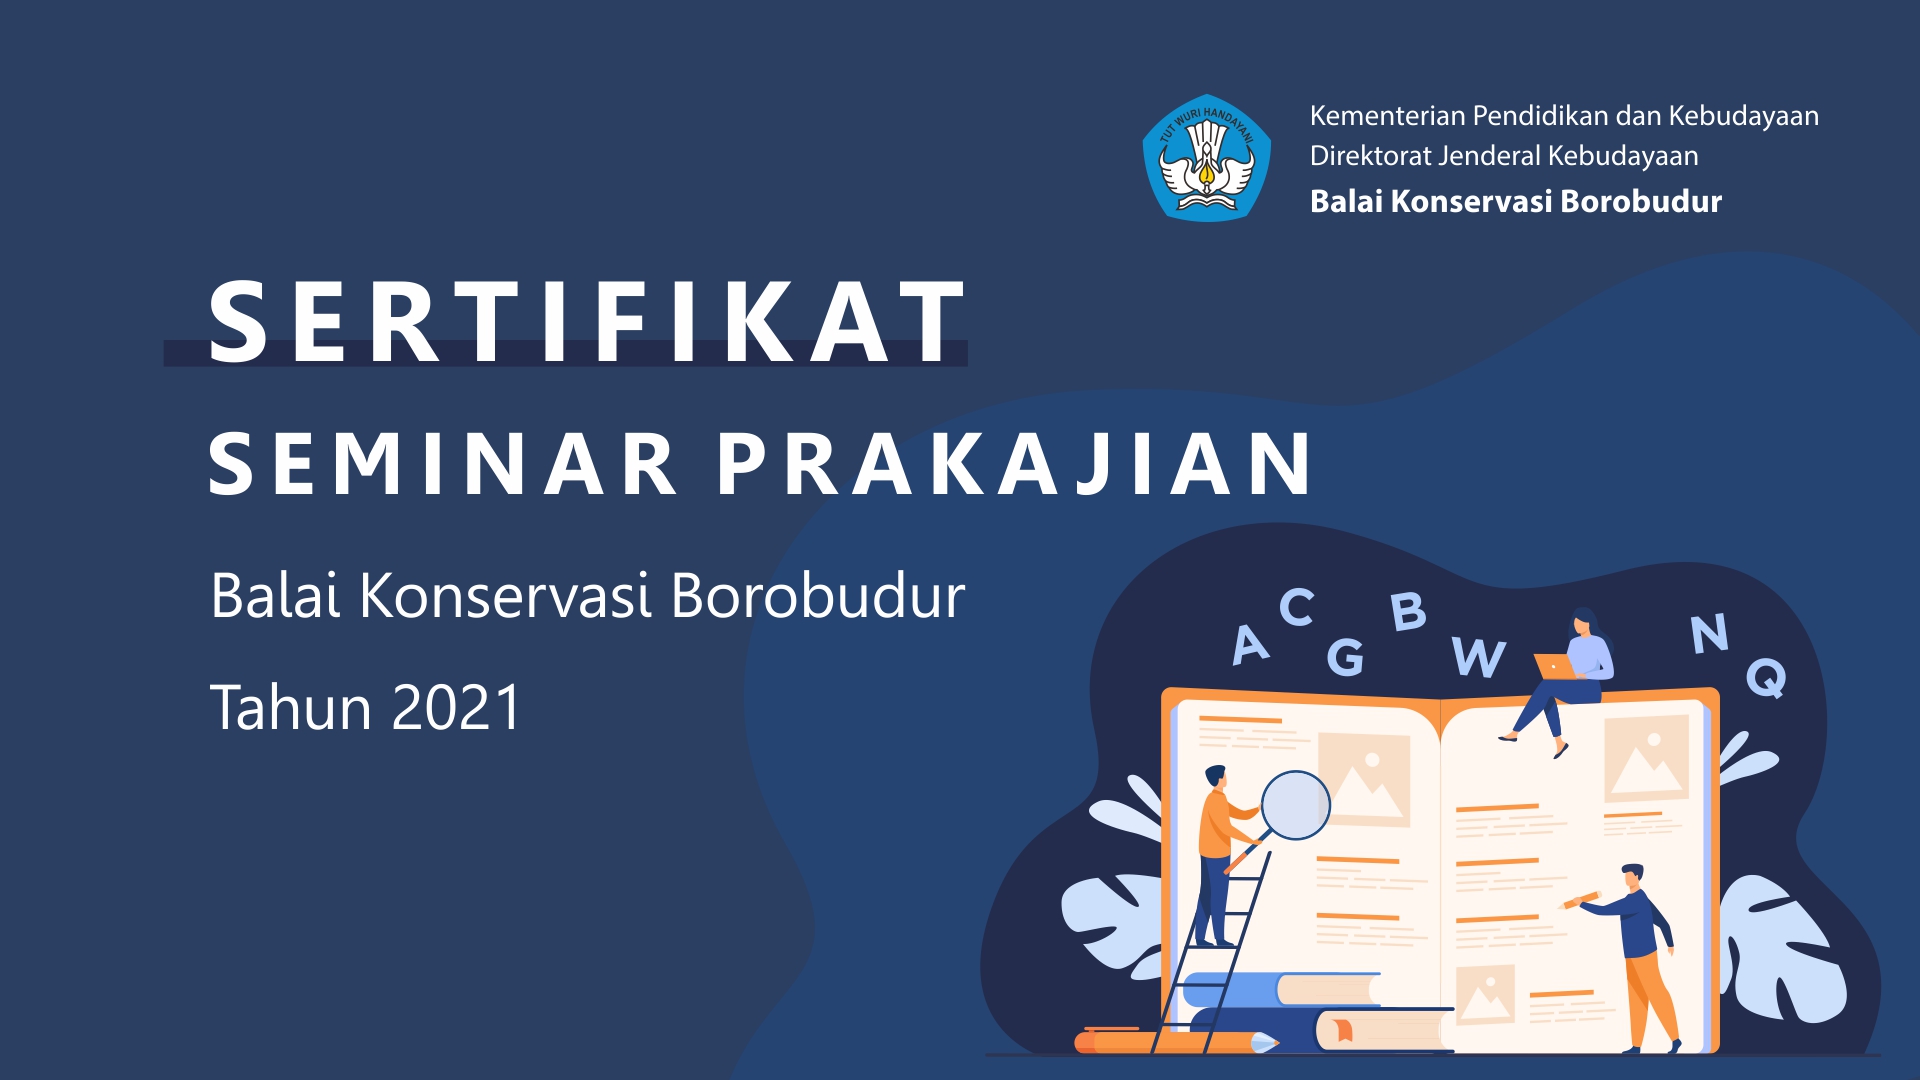 You are currently viewing Sertifikat Seminar Pra Kajian